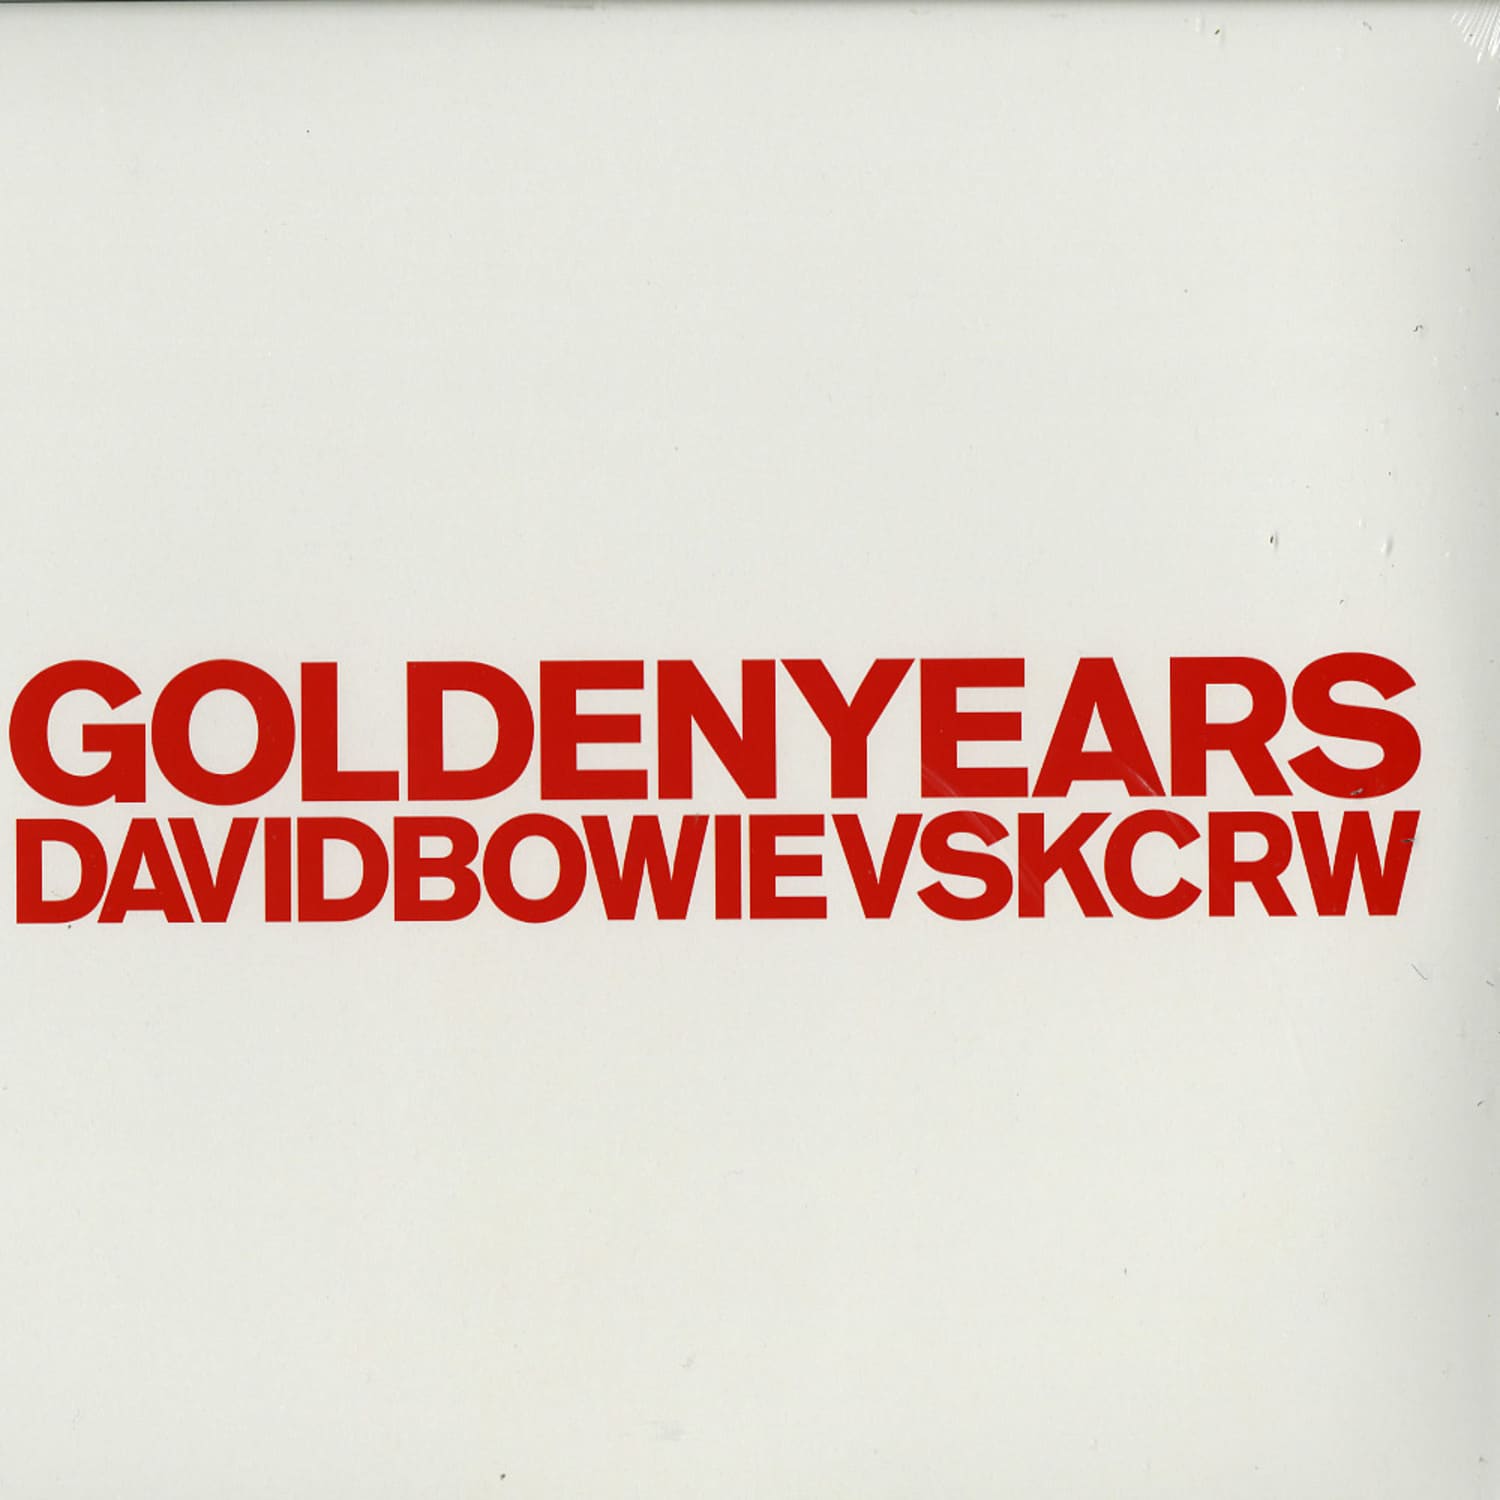 David Bowie vs KCRW - GOLDEN YEARS